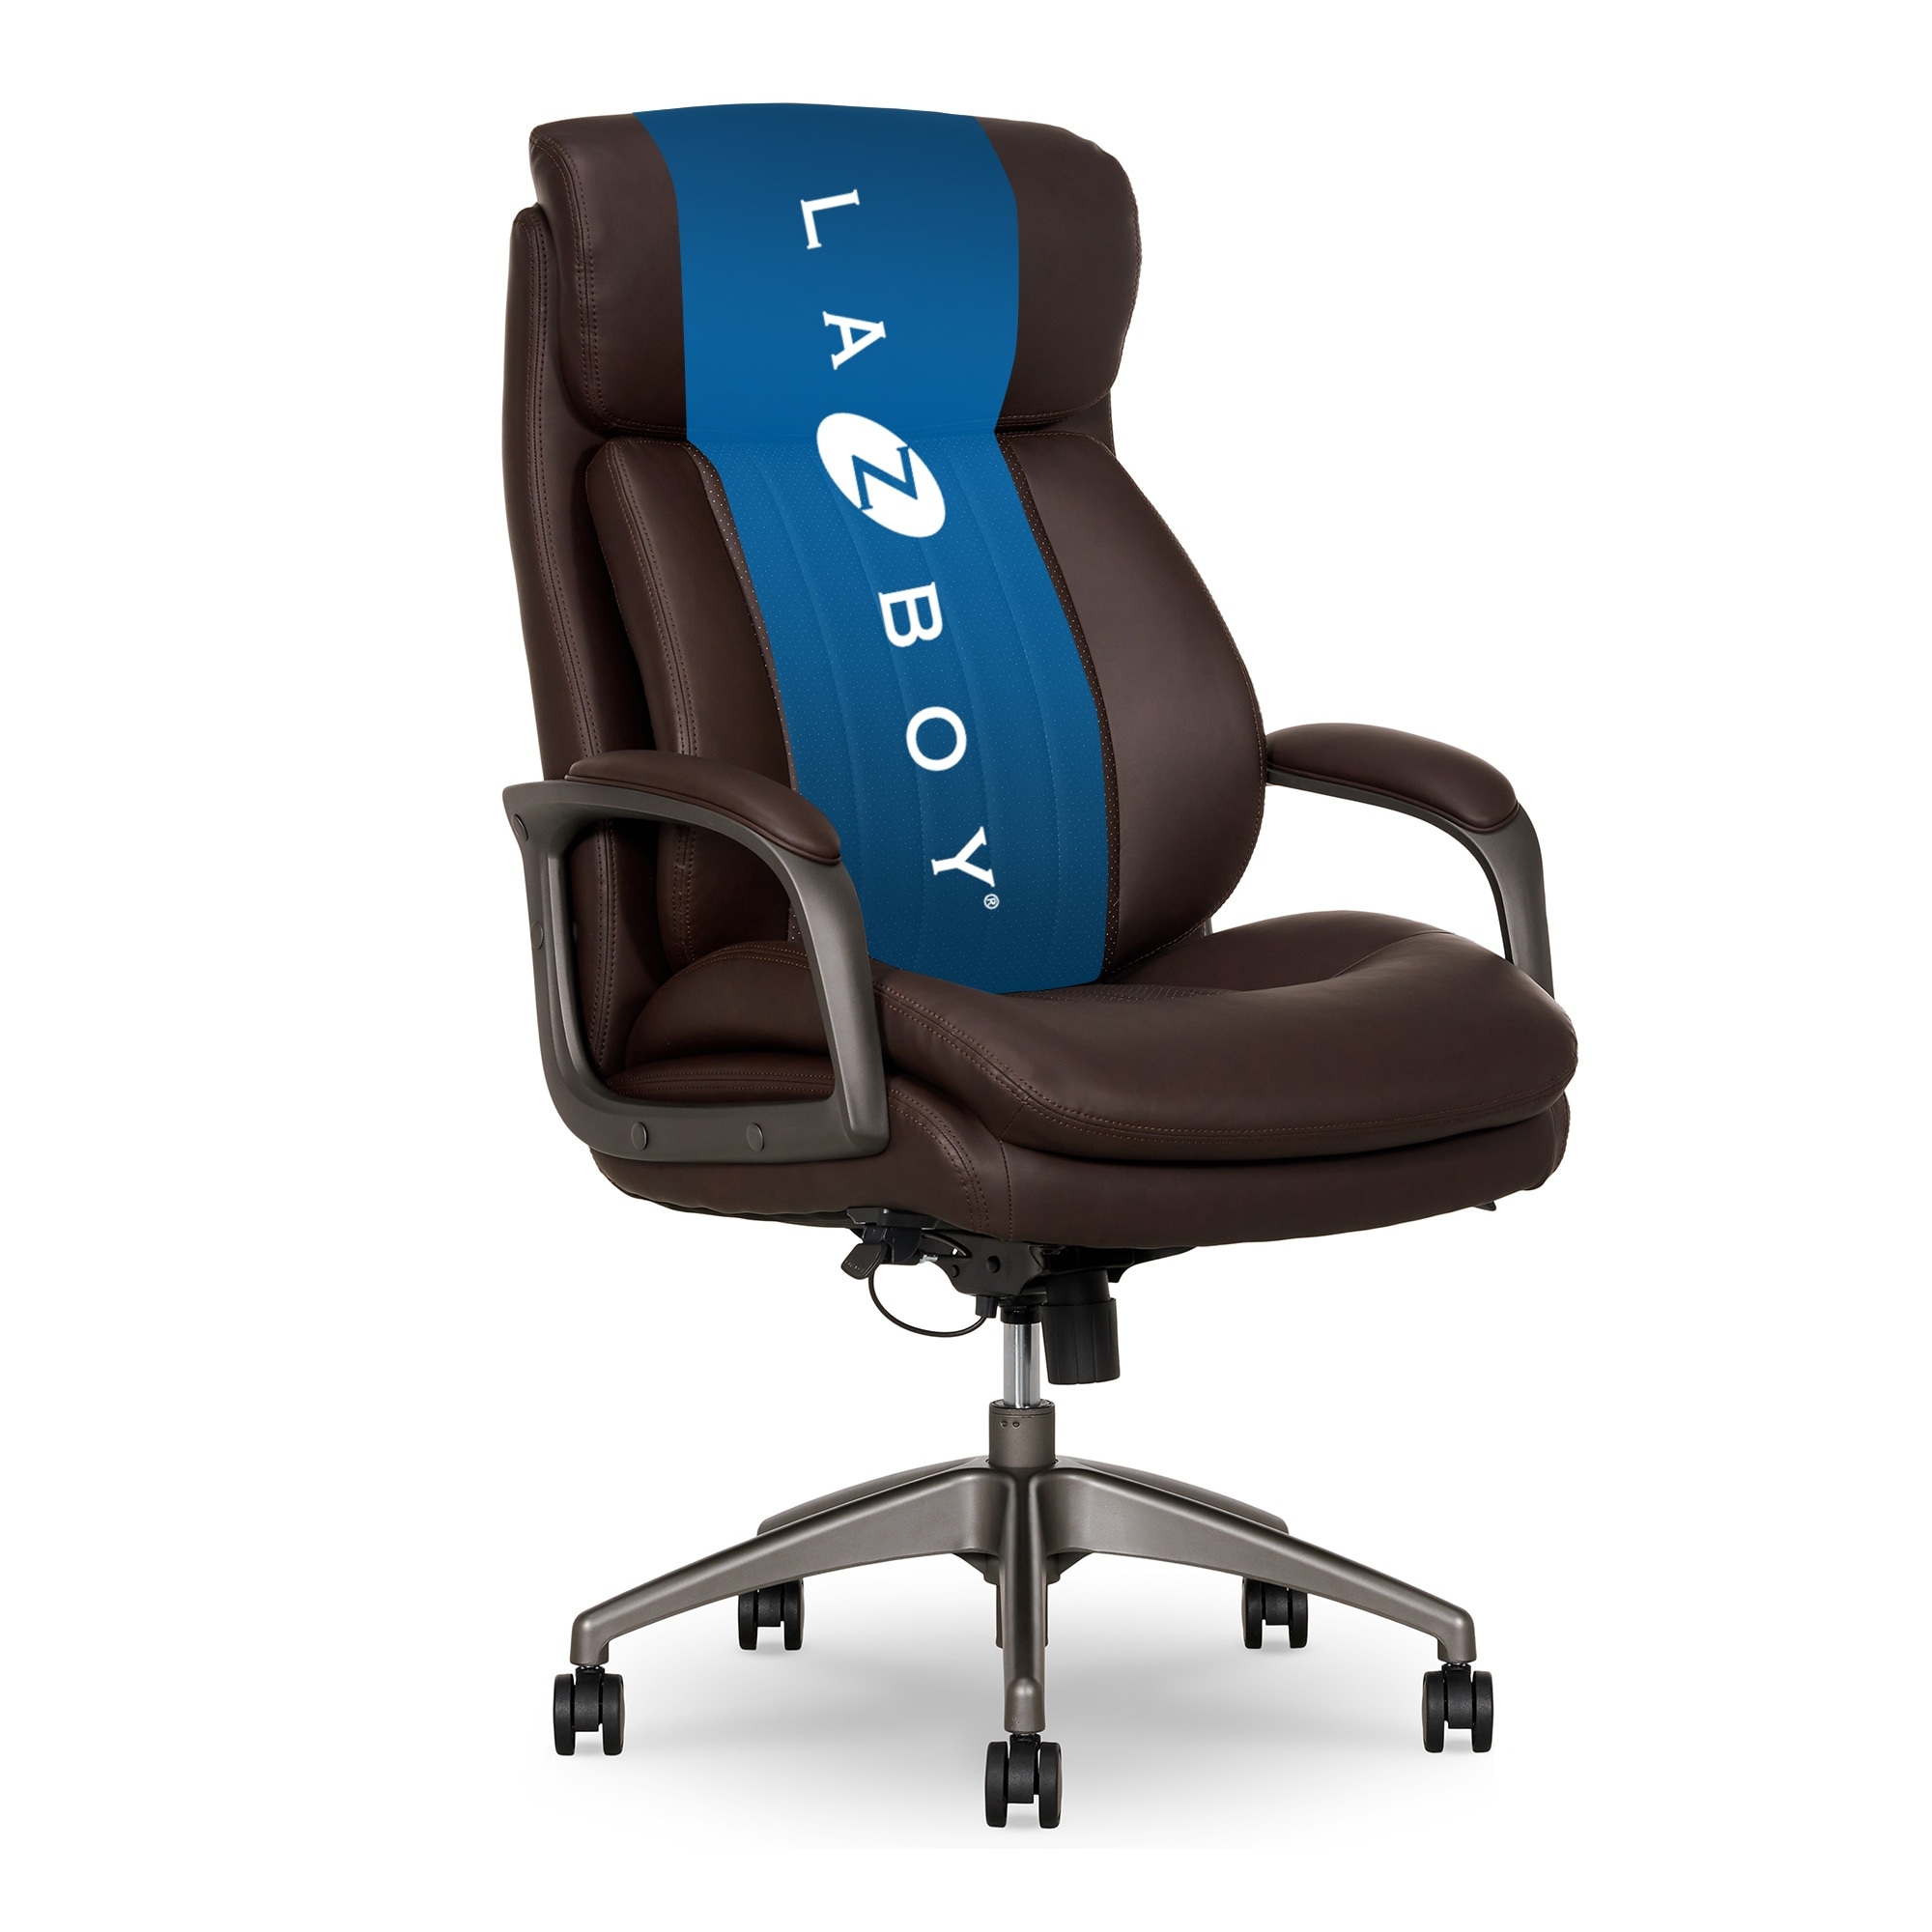 La-Z-Boy Bellamy Executive Office Chair with Memory Foam Cushions